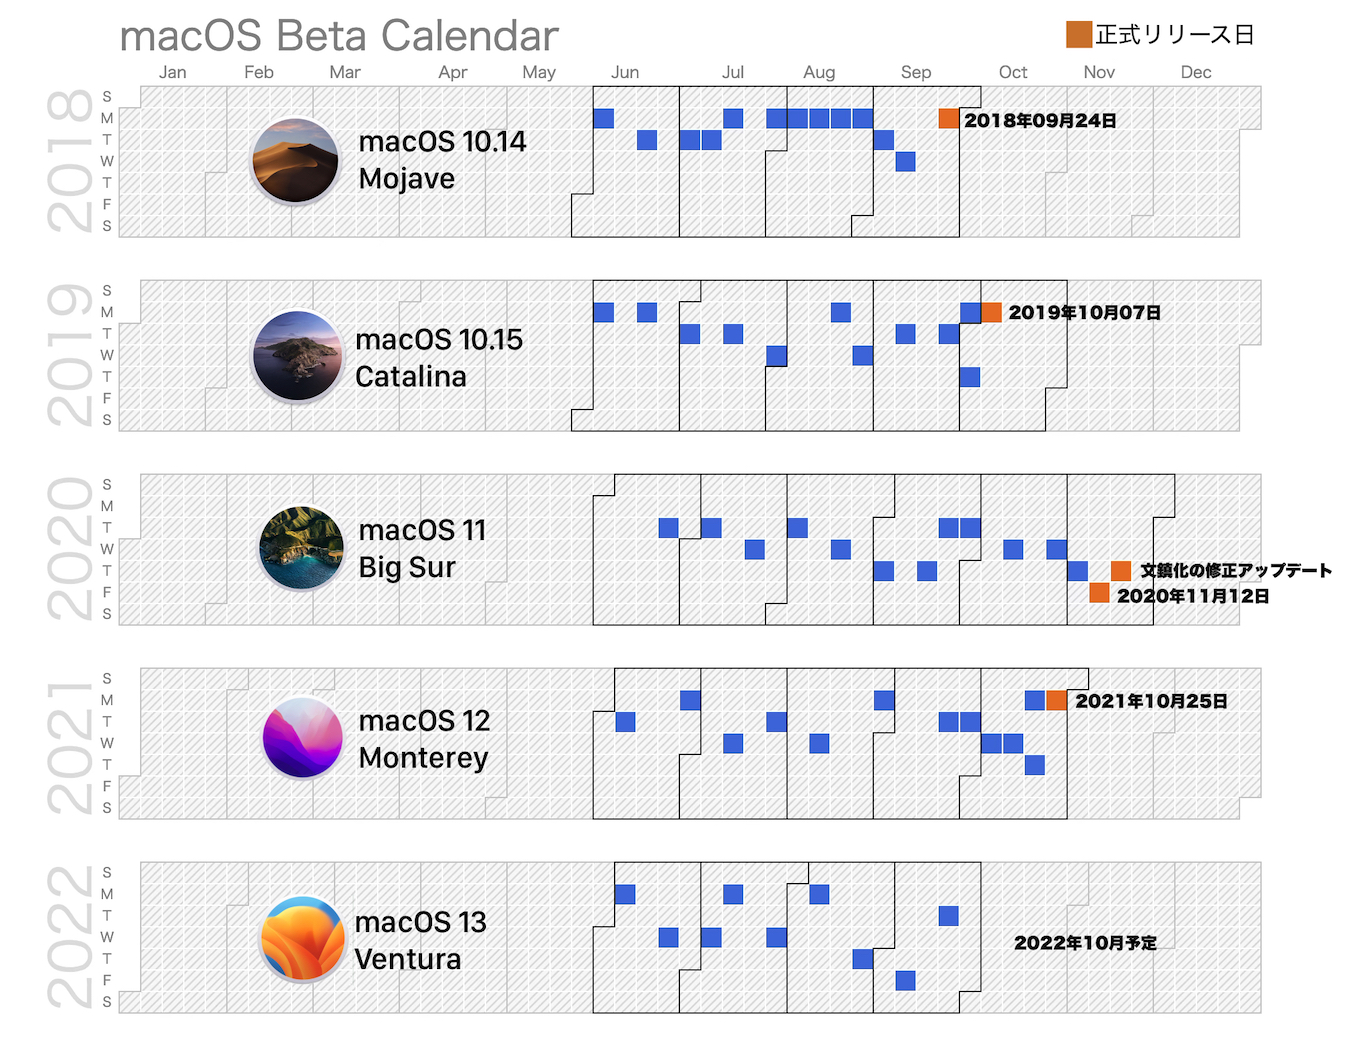 macOS 13 VenturaのBetaカレンダー